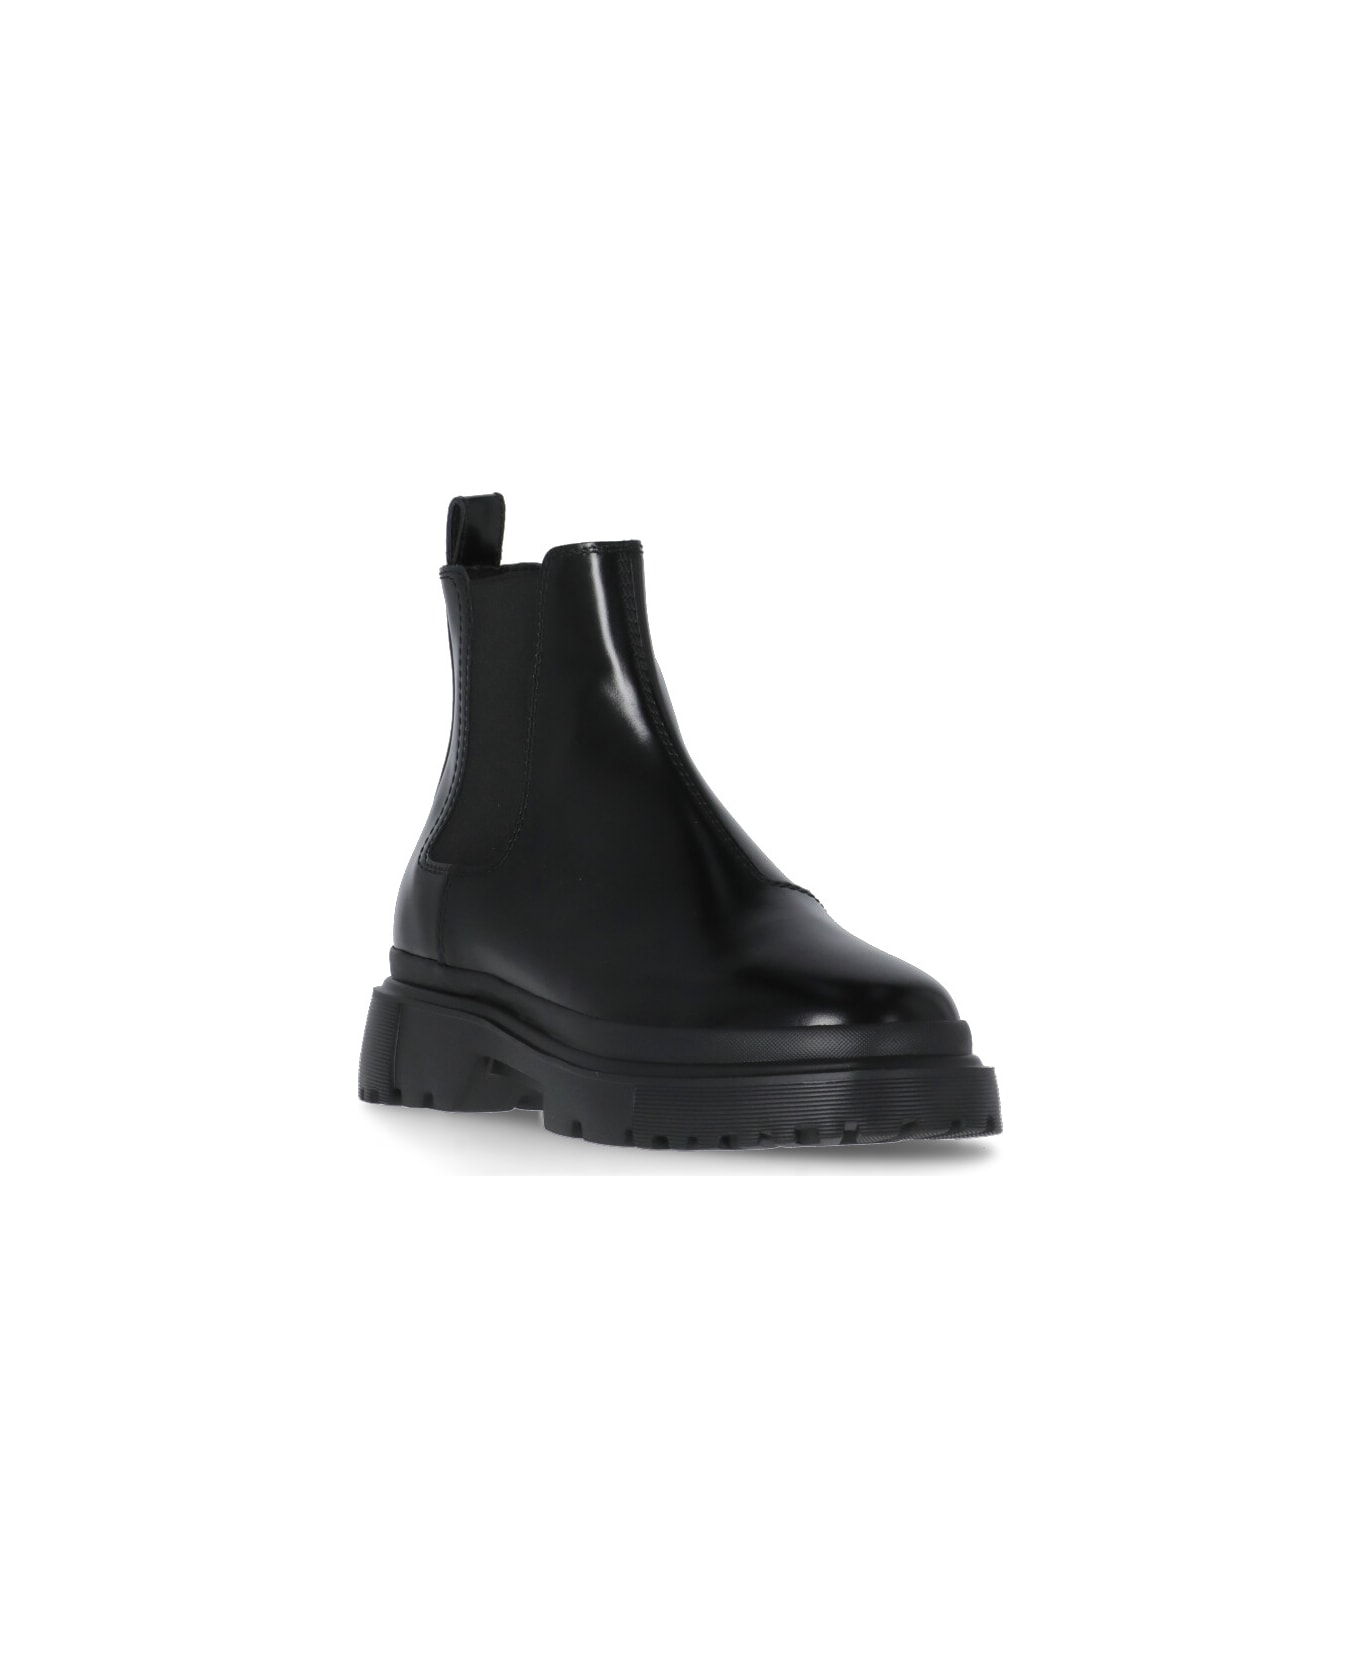 Hogan H629 Chelsea Boots - Black